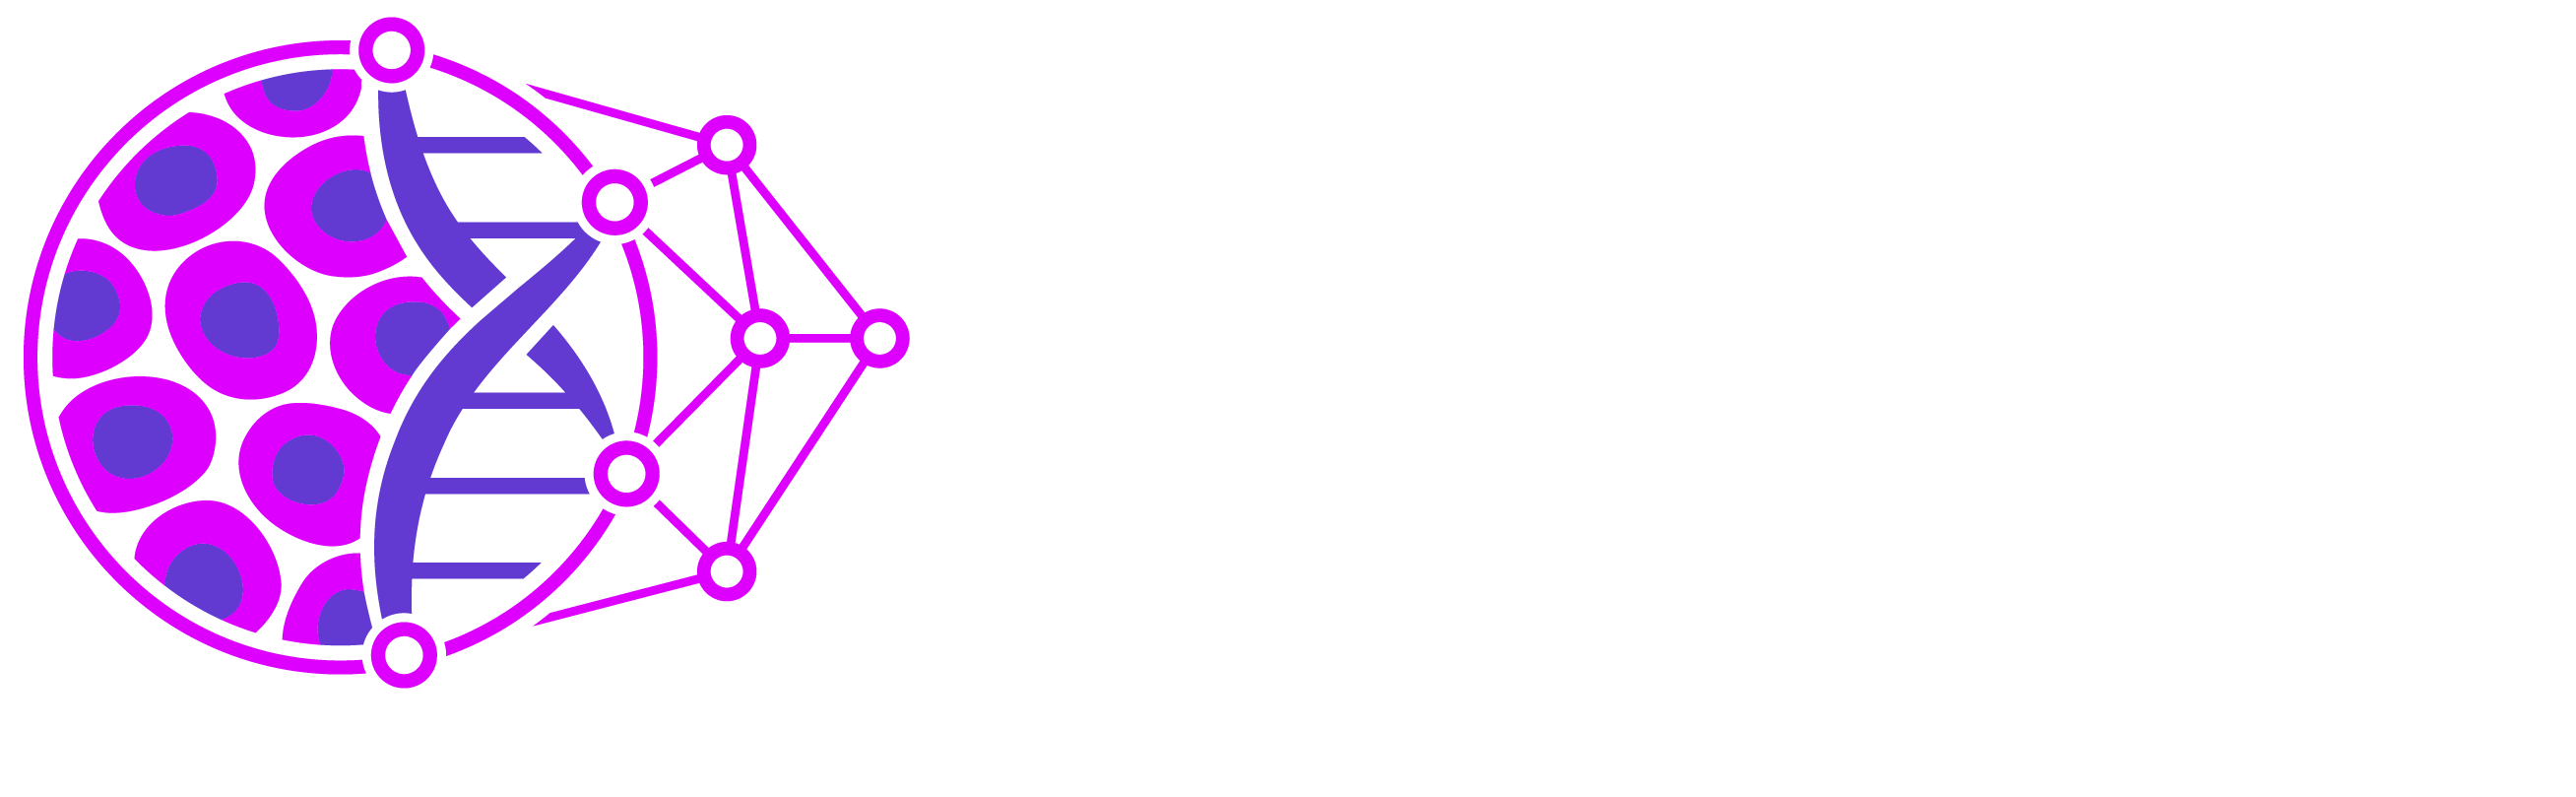 Mahmood Lab logo